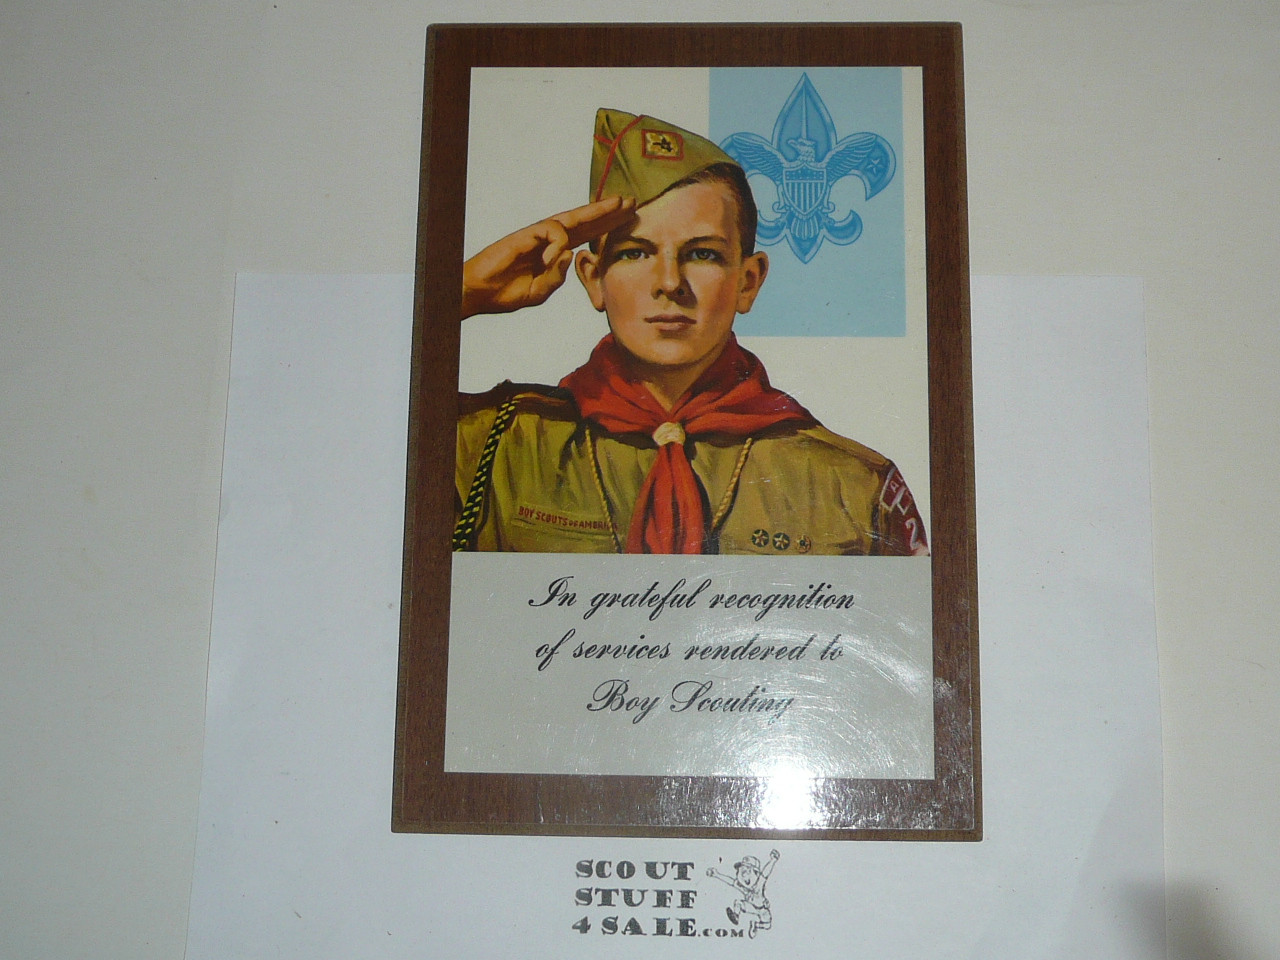 1950's Boy Scout Recognition Standing Bookshelf Ornament, Shows a Little Wear